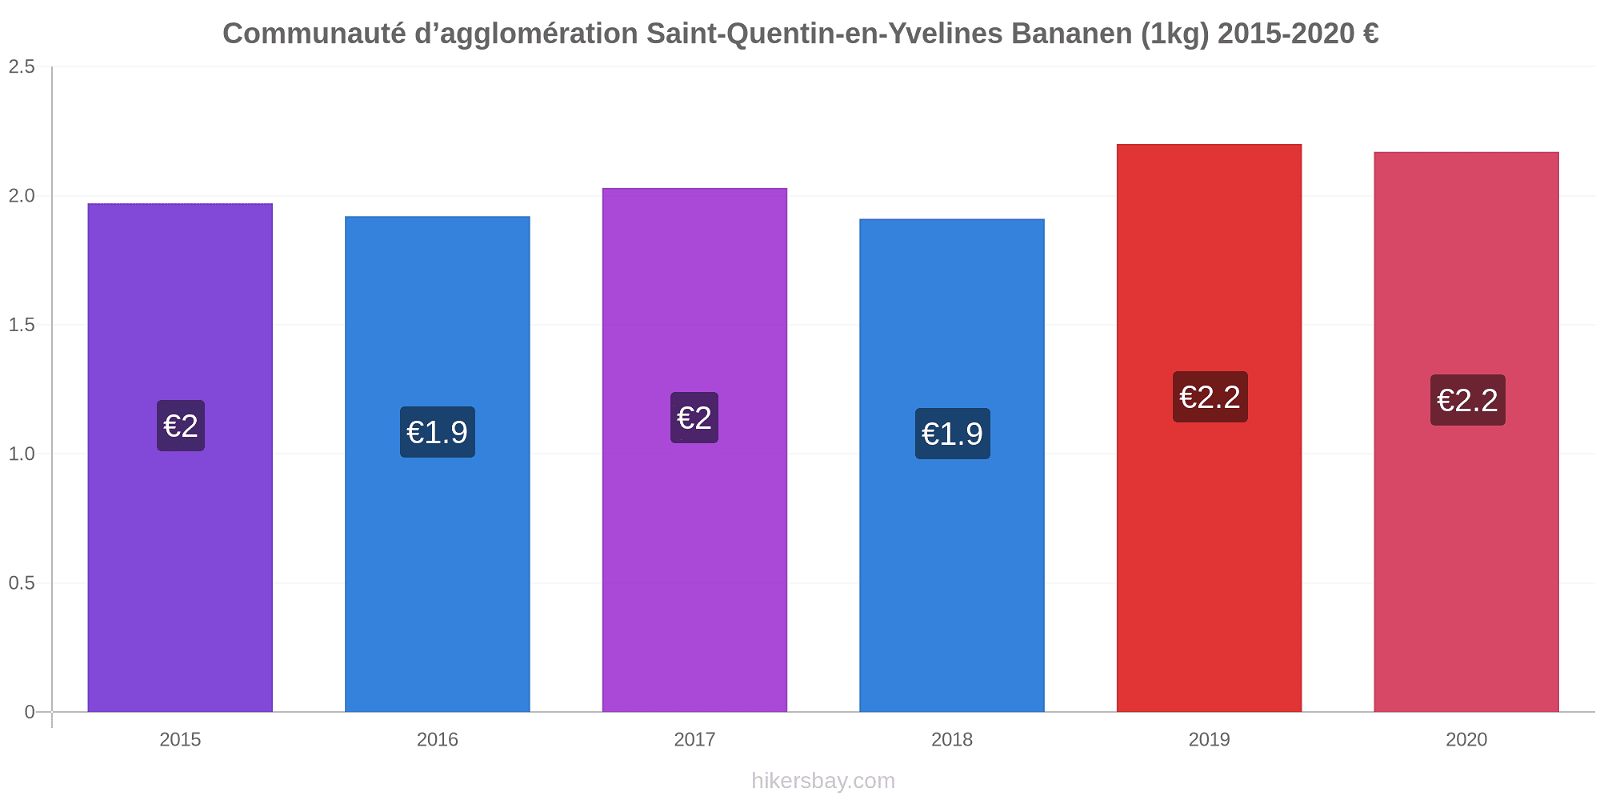 Communauté d’agglomération Saint-Quentin-en-Yvelines Preisänderungen Banane (1kg) hikersbay.com